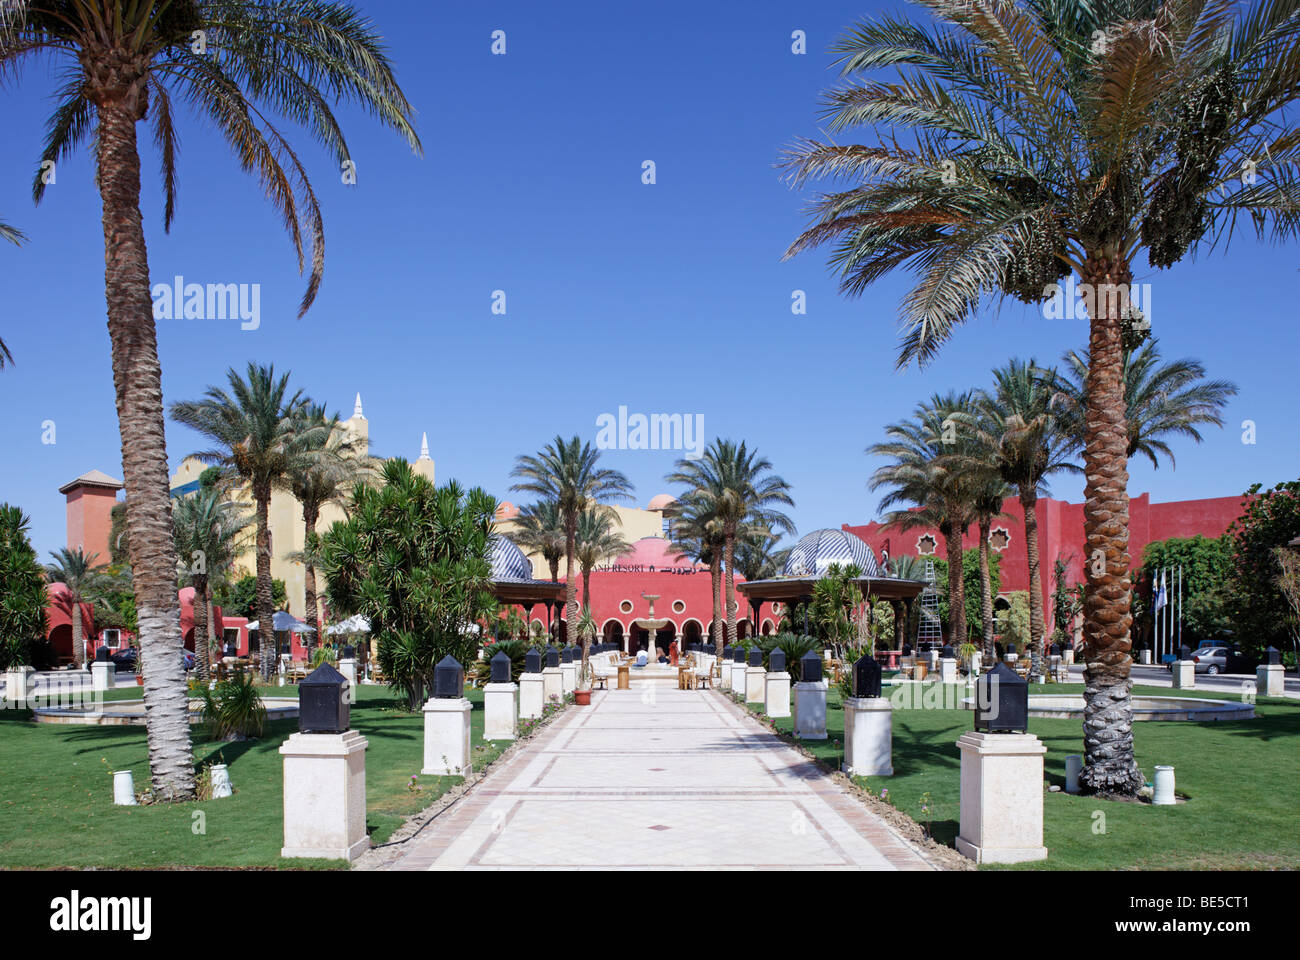 Place en face de Grand Resort, hotel, fontaine, dattiers, pavillons, Yussuf Afifi road, Hurghada, Egypte, Mer Rouge, Afrique Banque D'Images